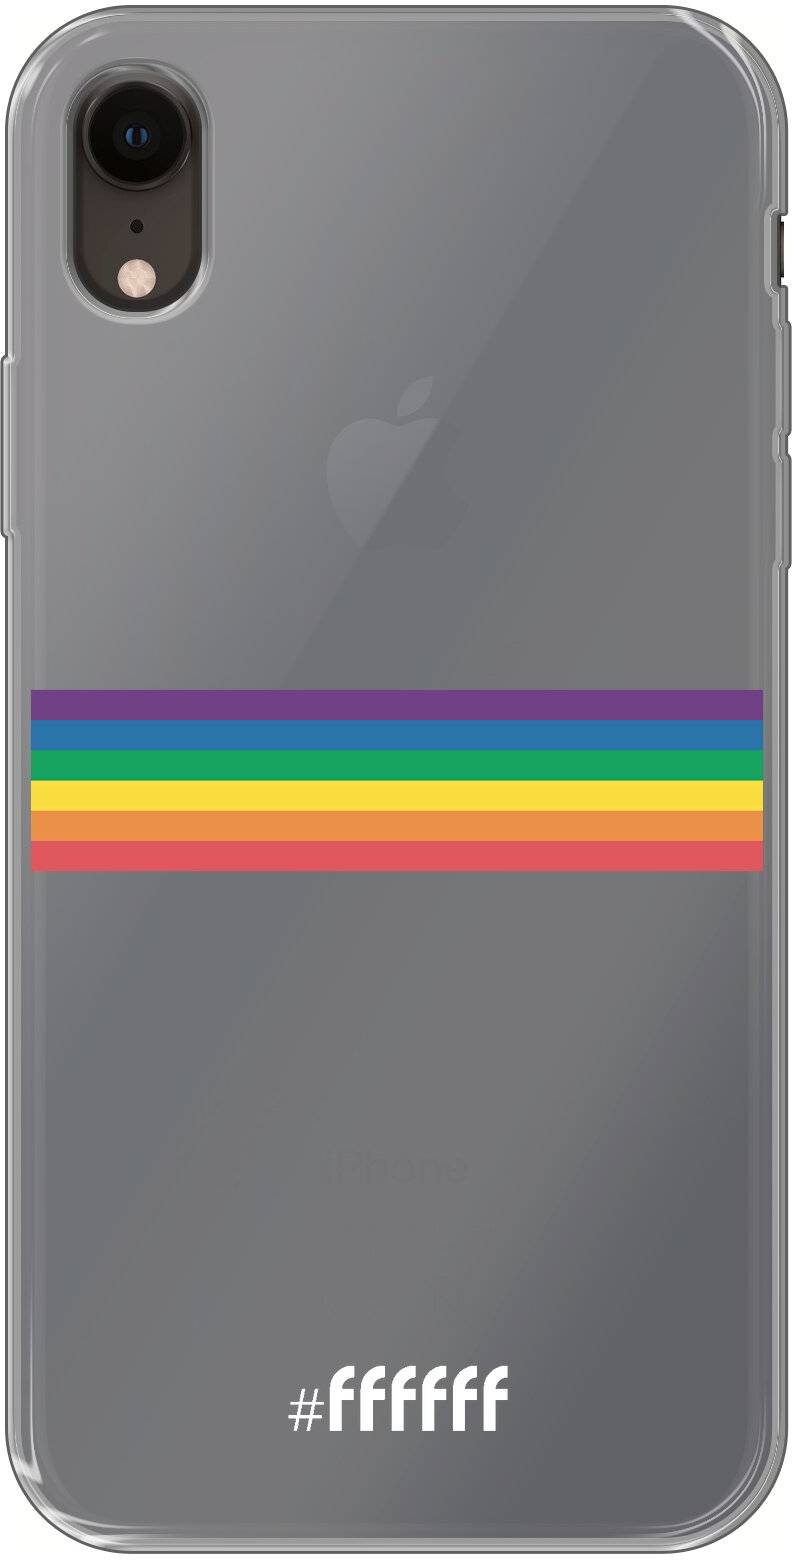 #LGBT - Horizontal iPhone Xr